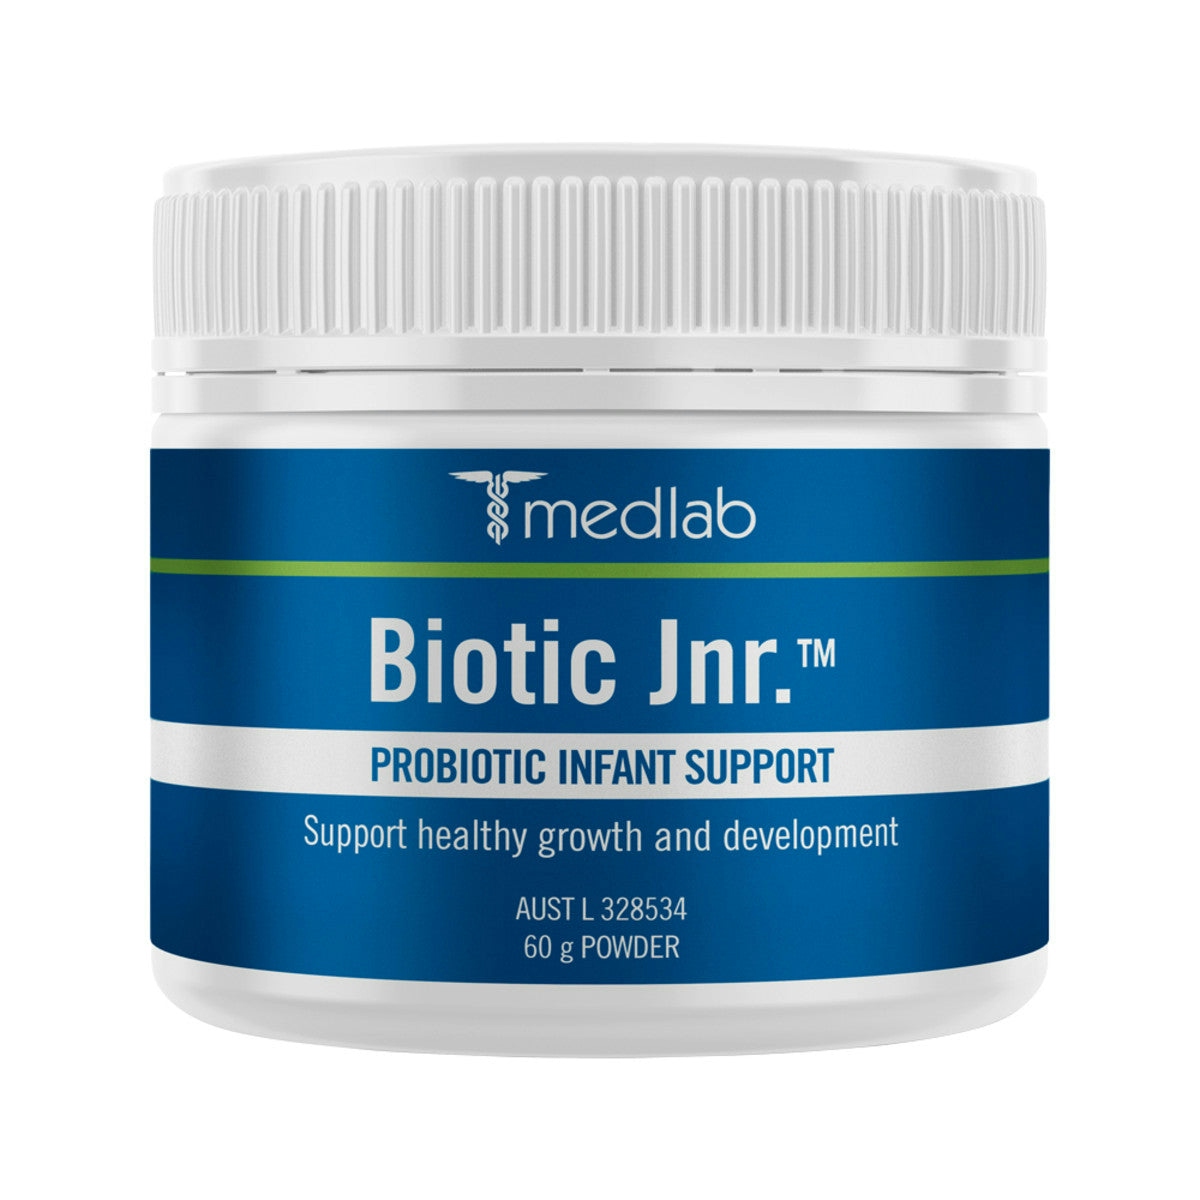 image of Medlab Biotic Jnr 60g on white background